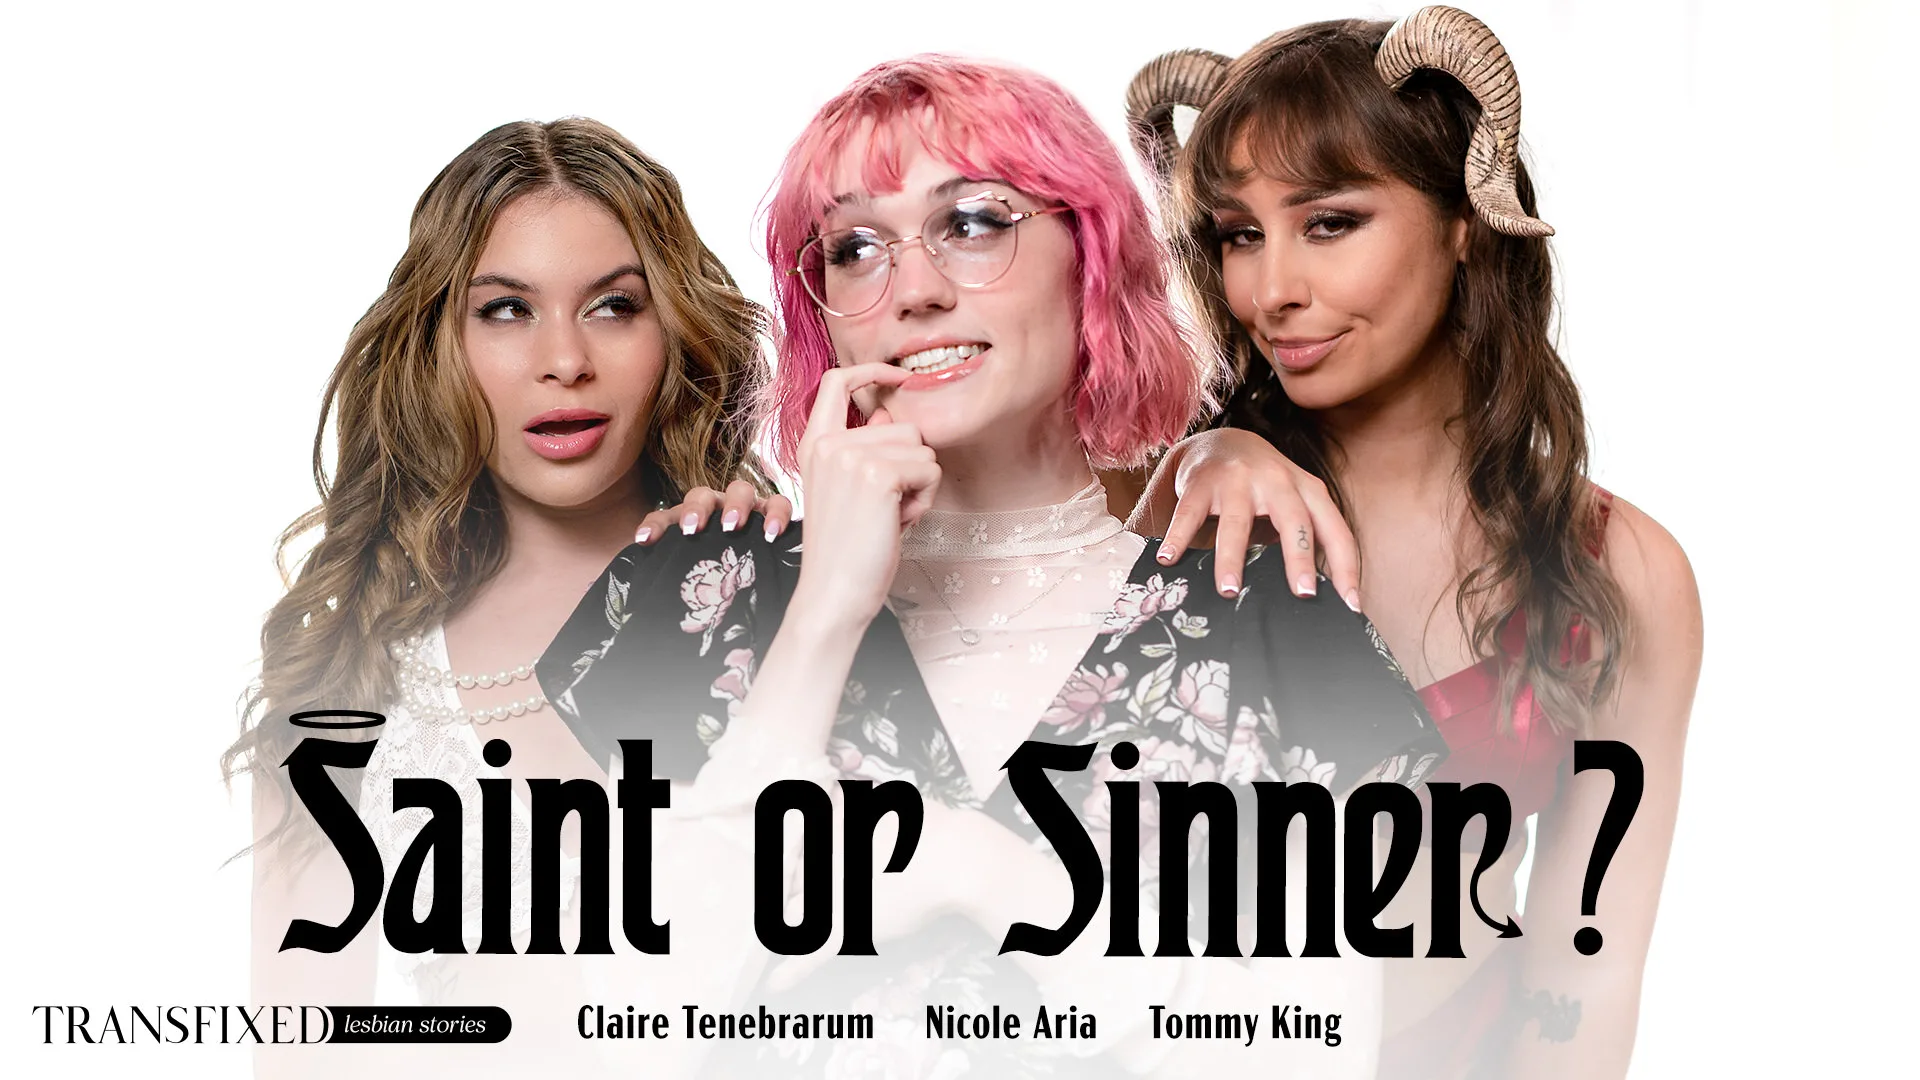 Saint Or Sinner? - Transfixed